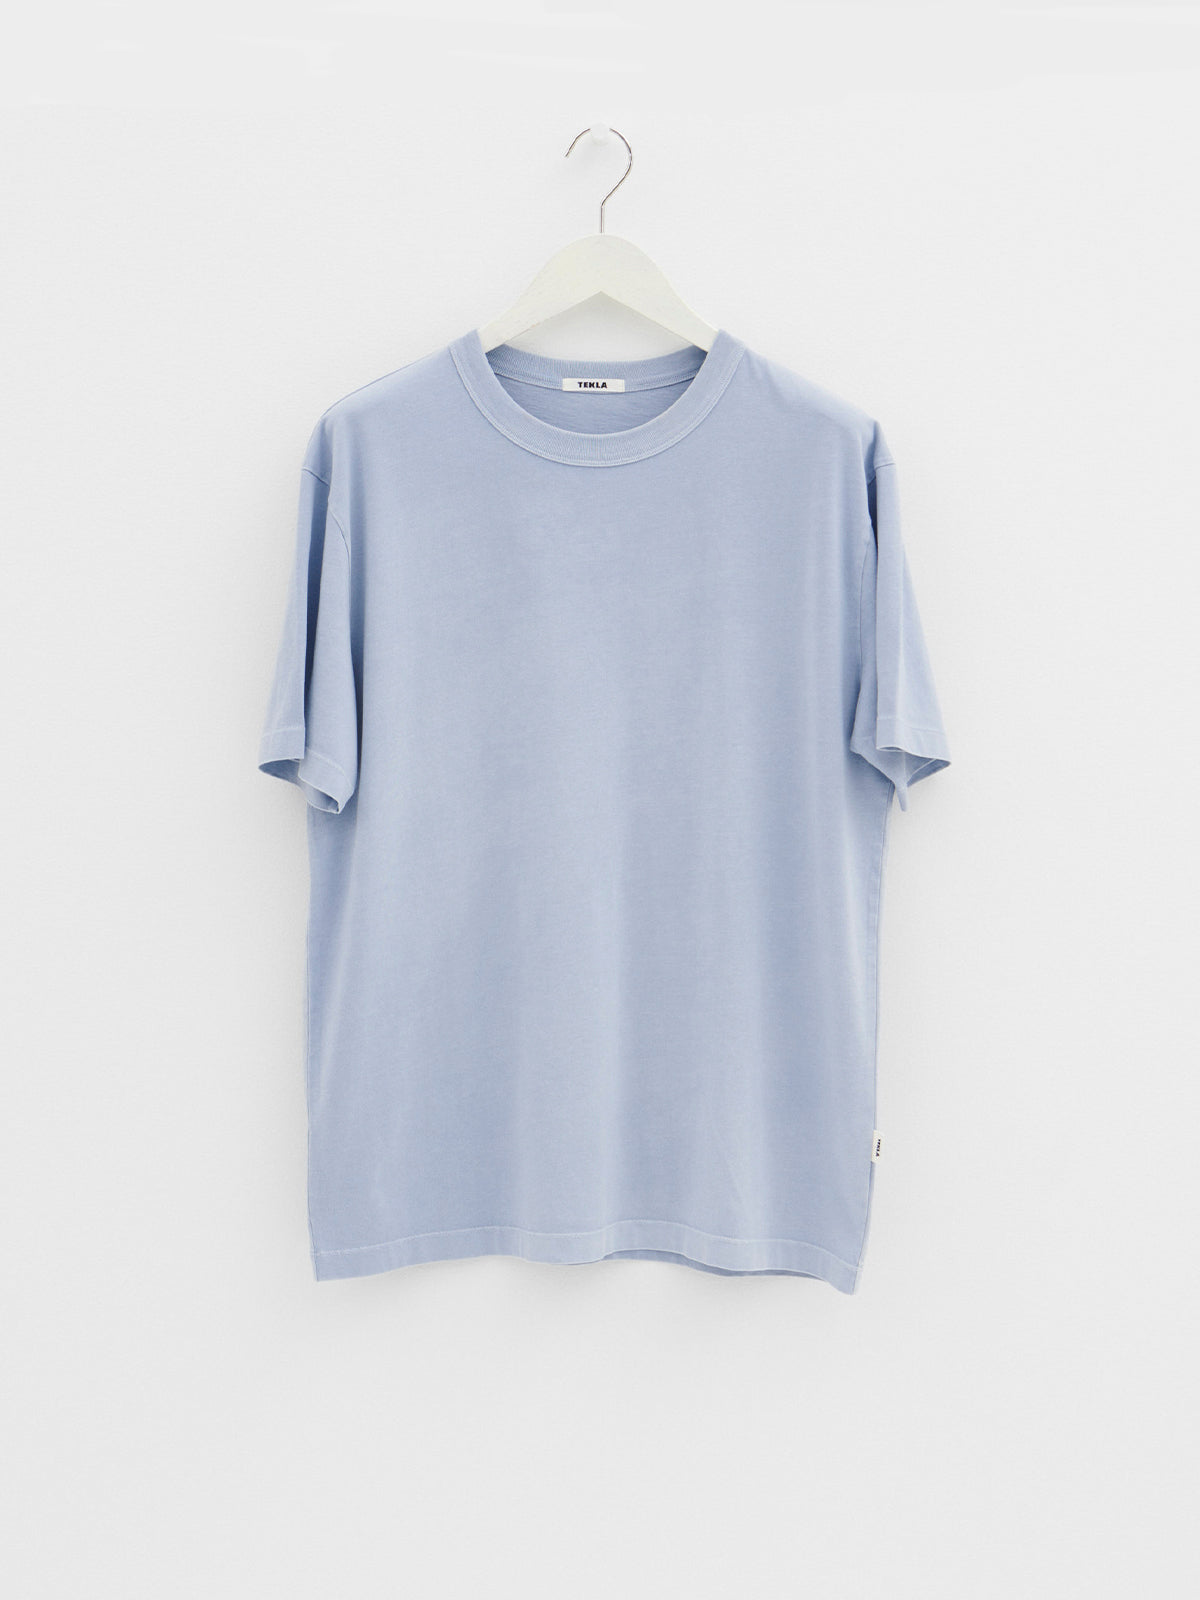 Sleeping T-Shirt in Blue